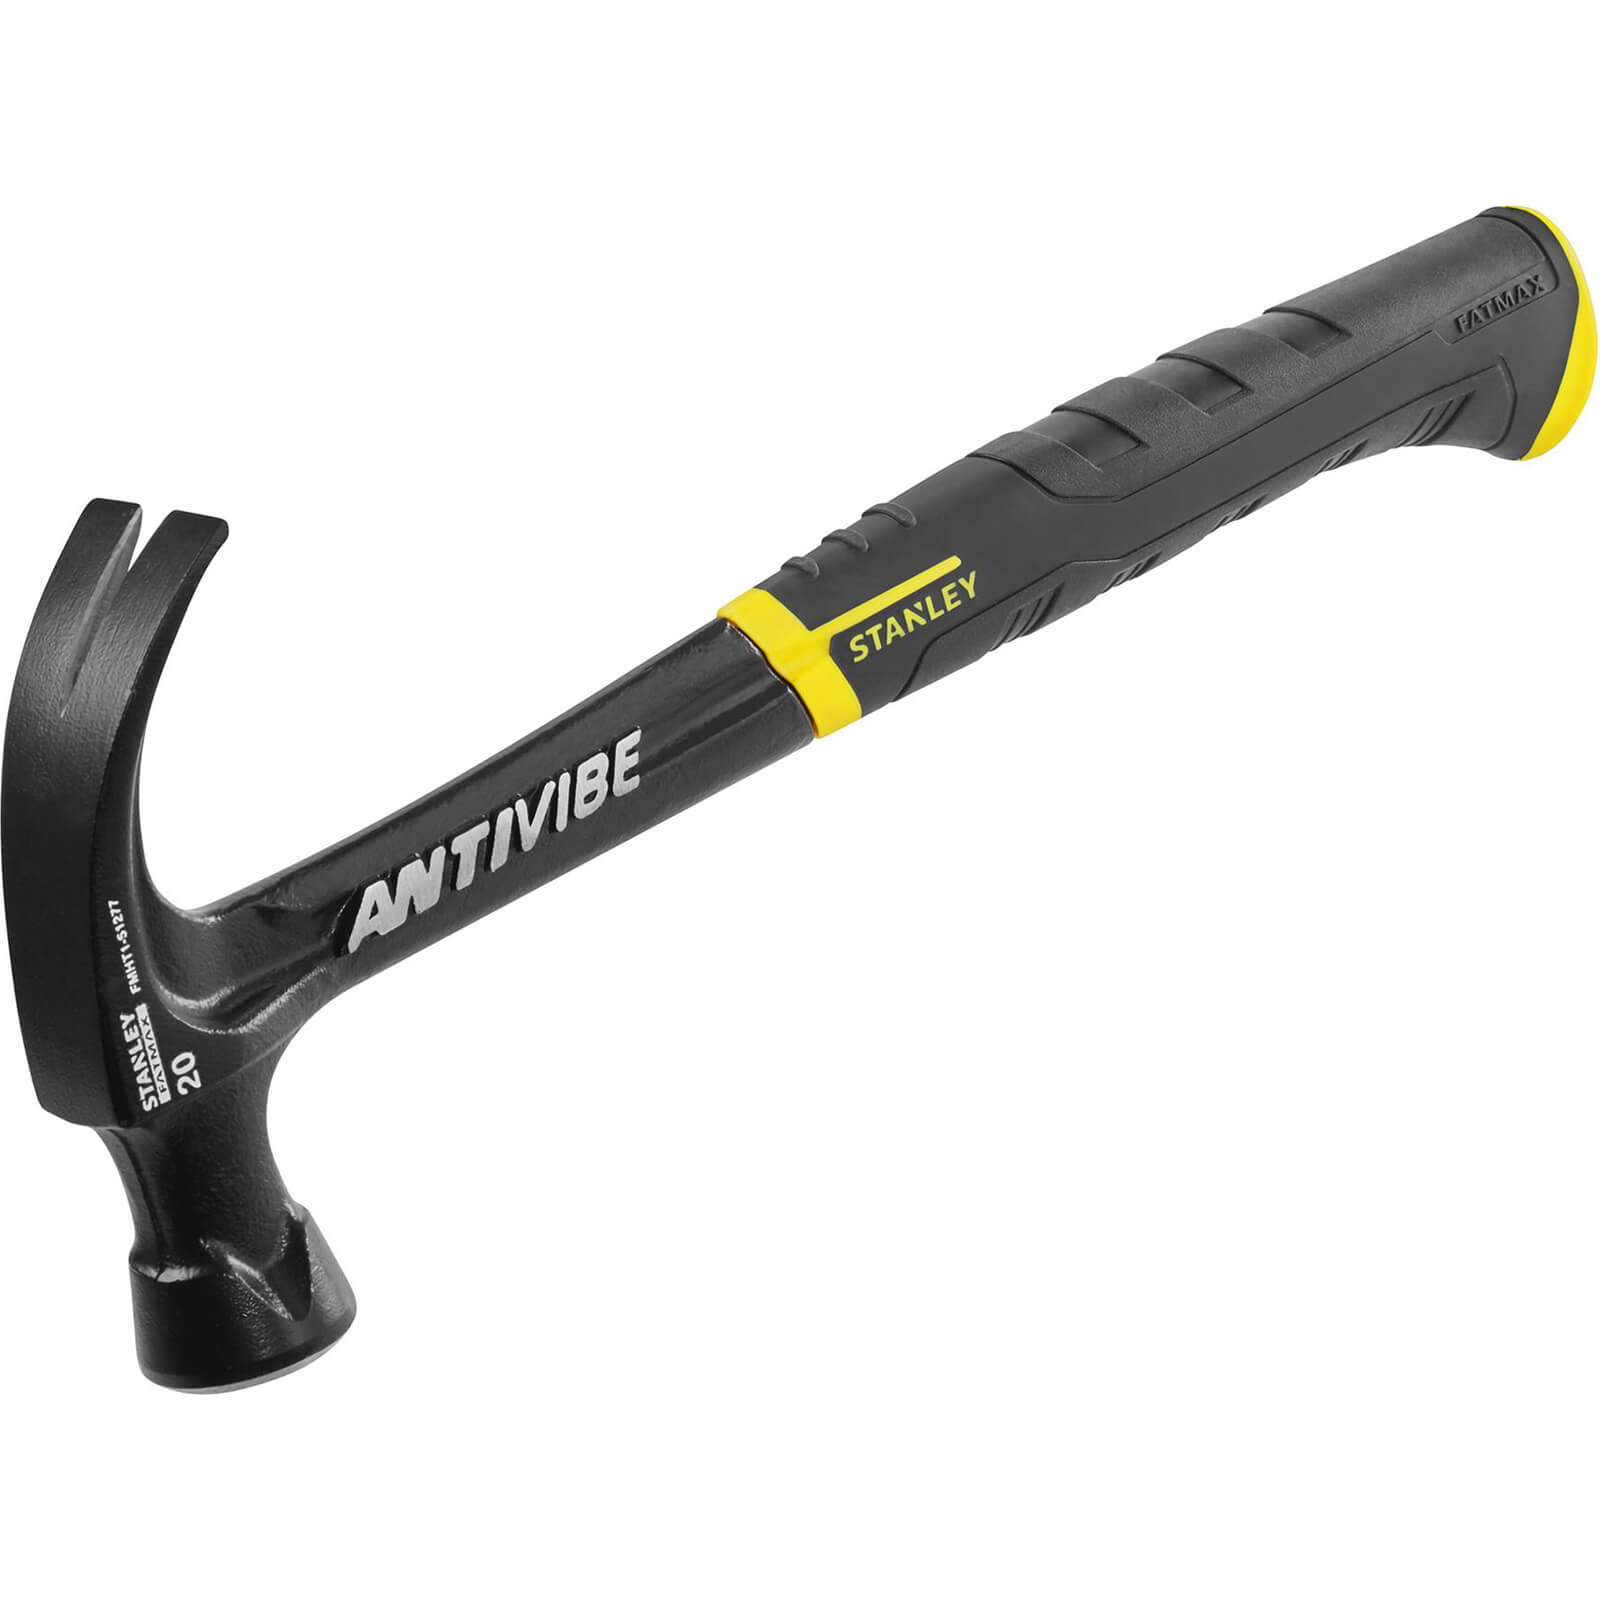 Stanley FatMax Antivibe Claw Hammer 560g